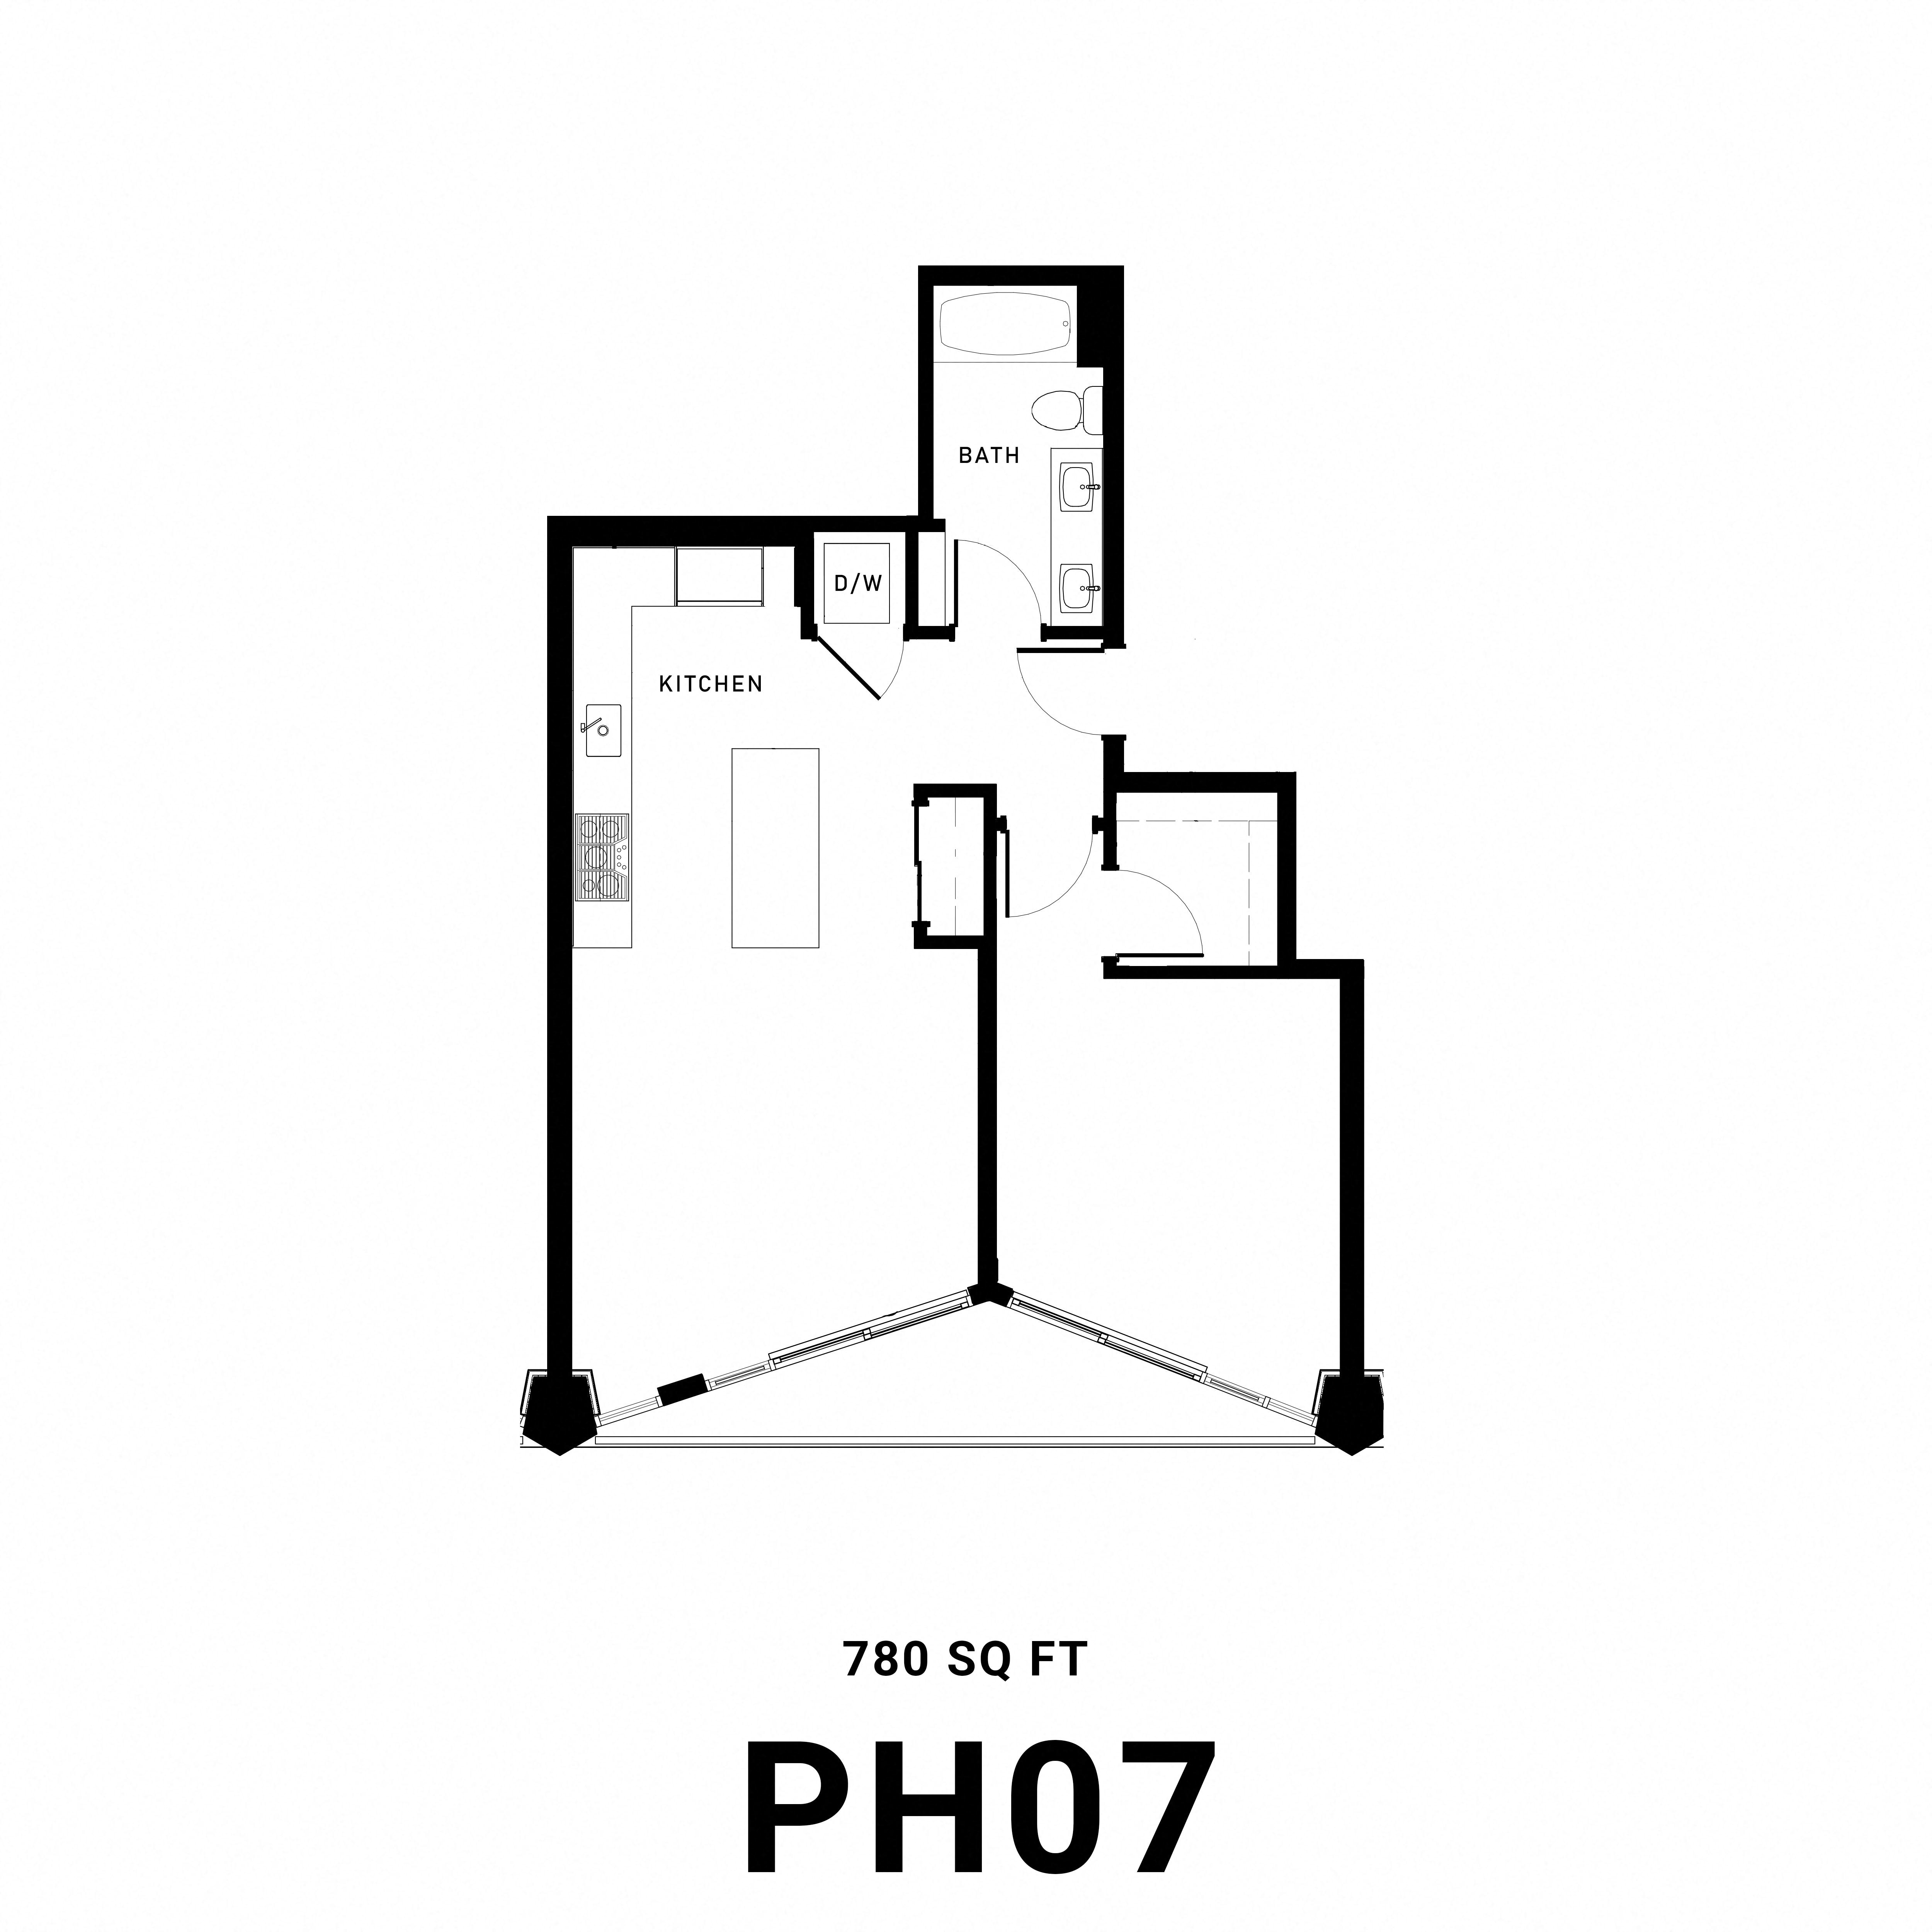 Floorplan PH07